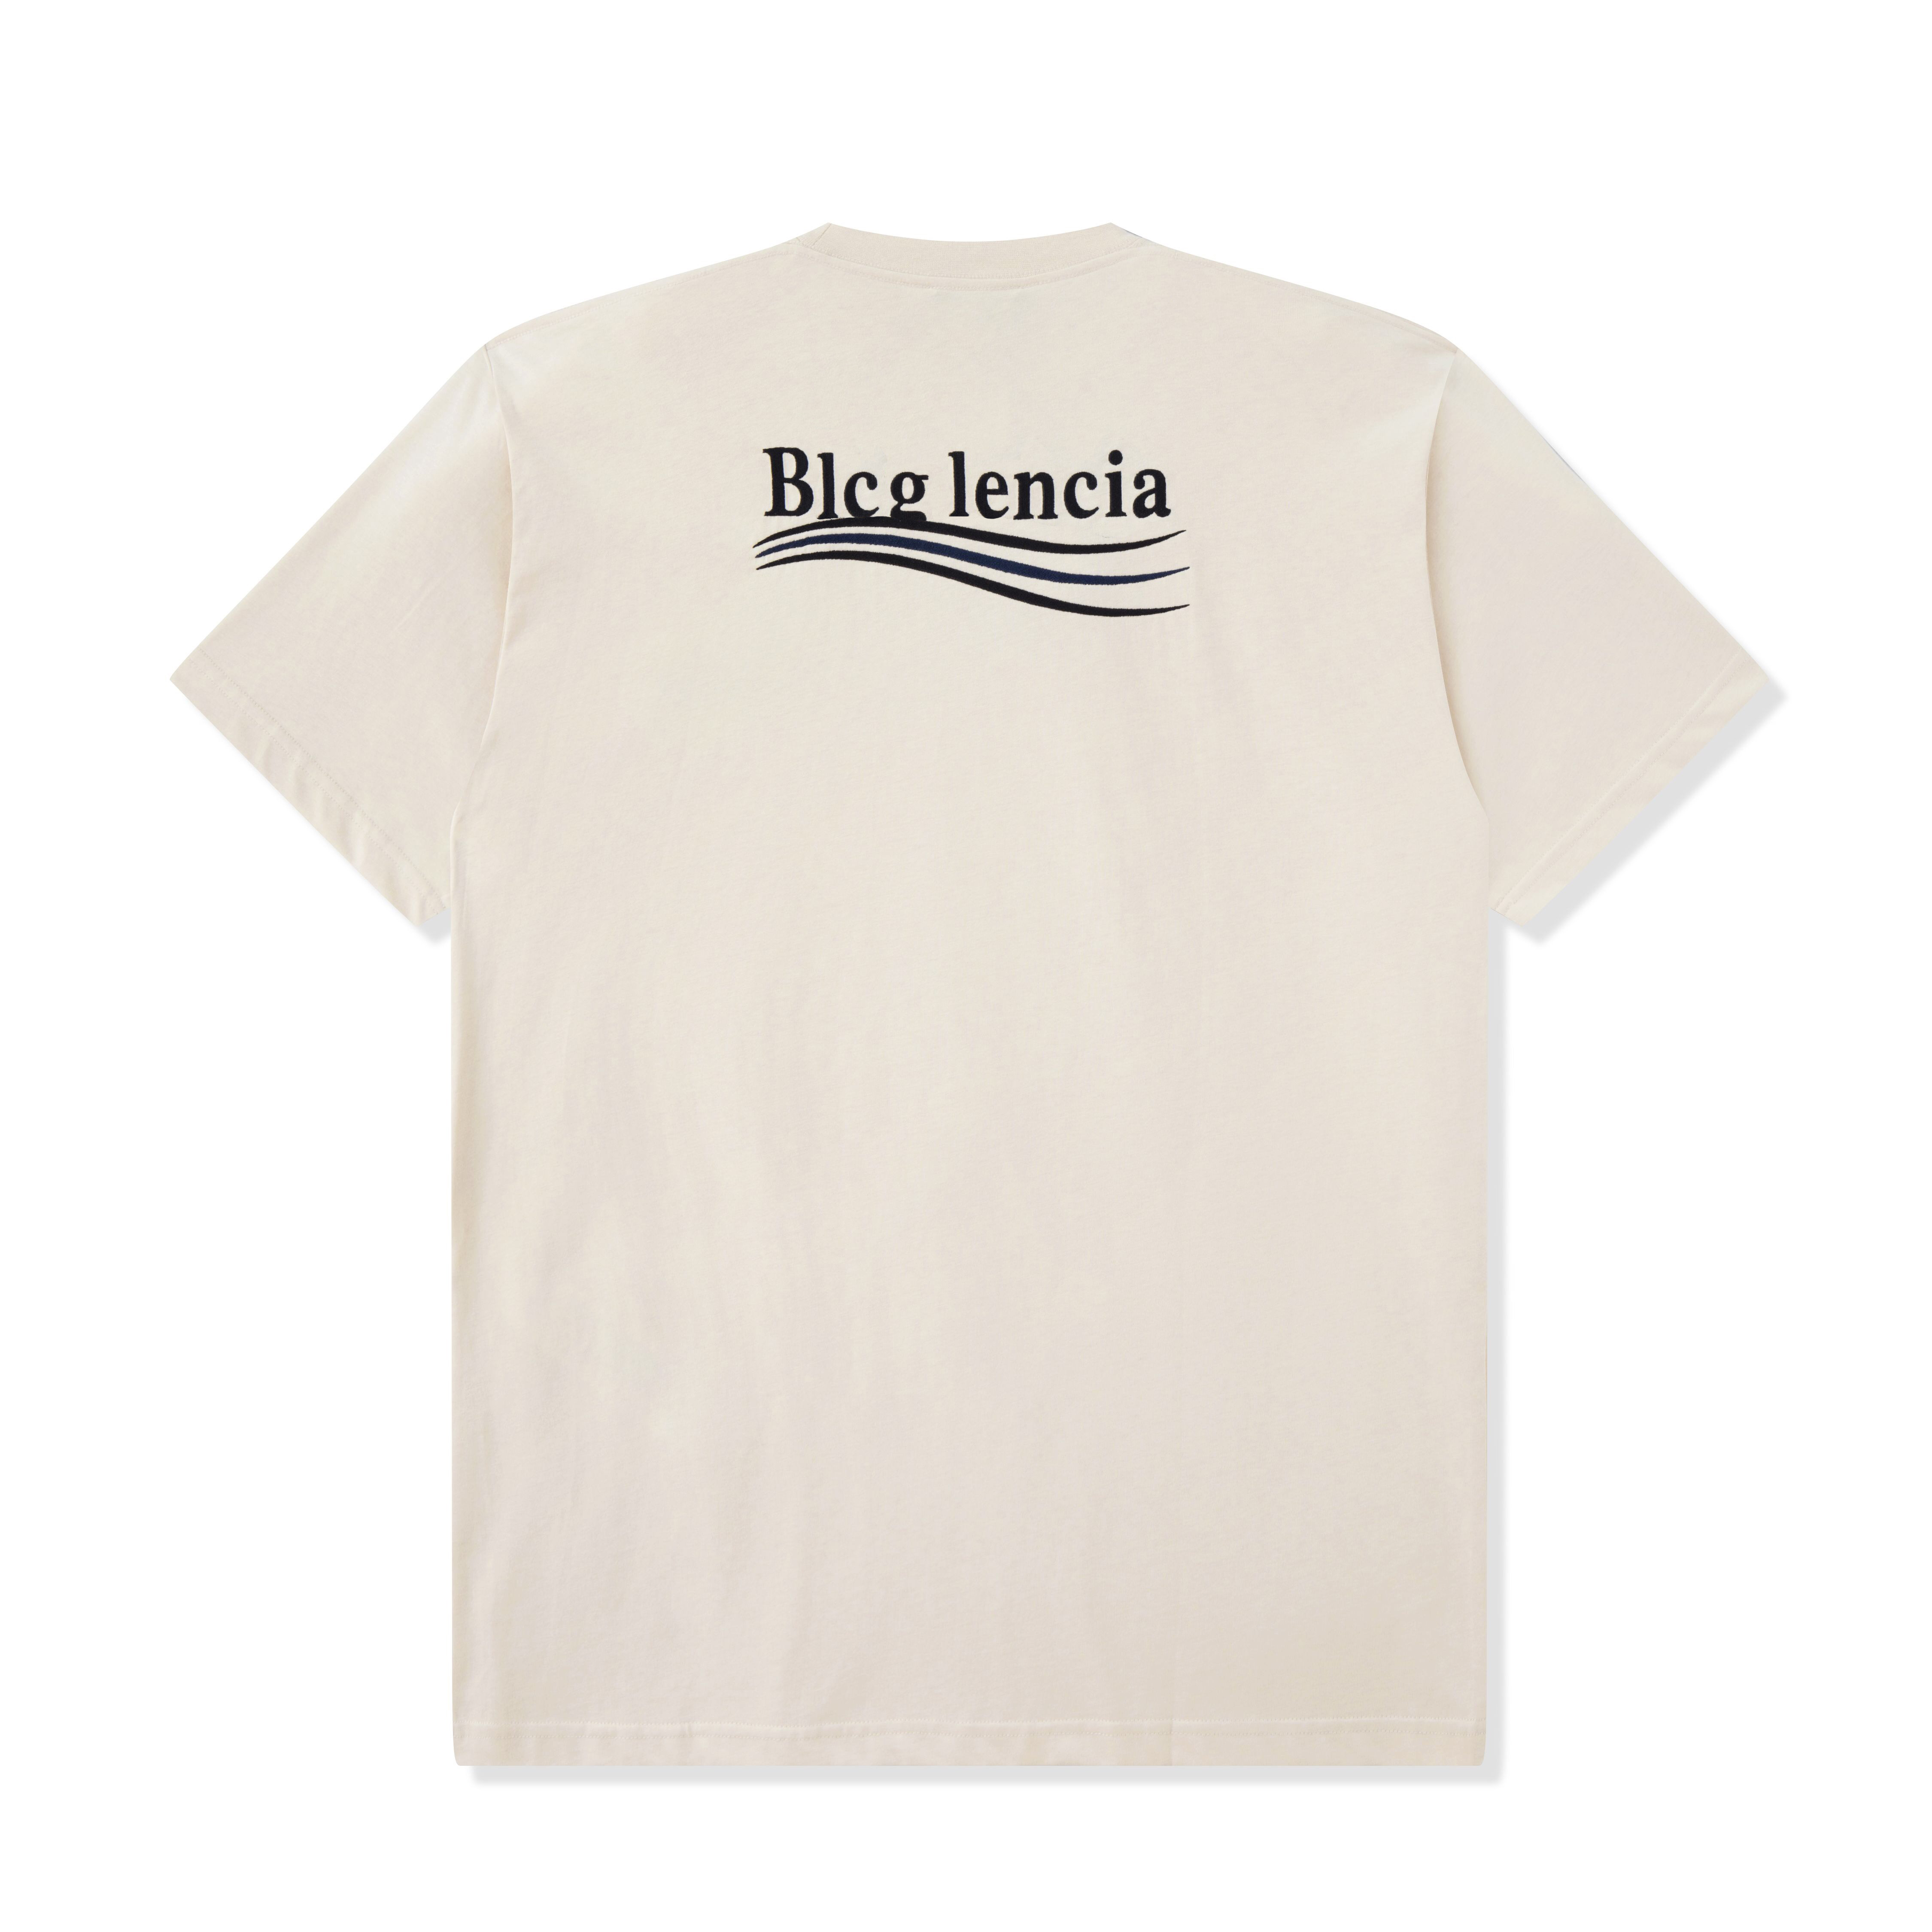 BLCG LENCIA UNISEX 여름 티셔츠 여성 대형 헤비급 헤비급 100%면 직물 트리플 스티치 솜씨 플러스 사이즈 탑 티스 SM130166